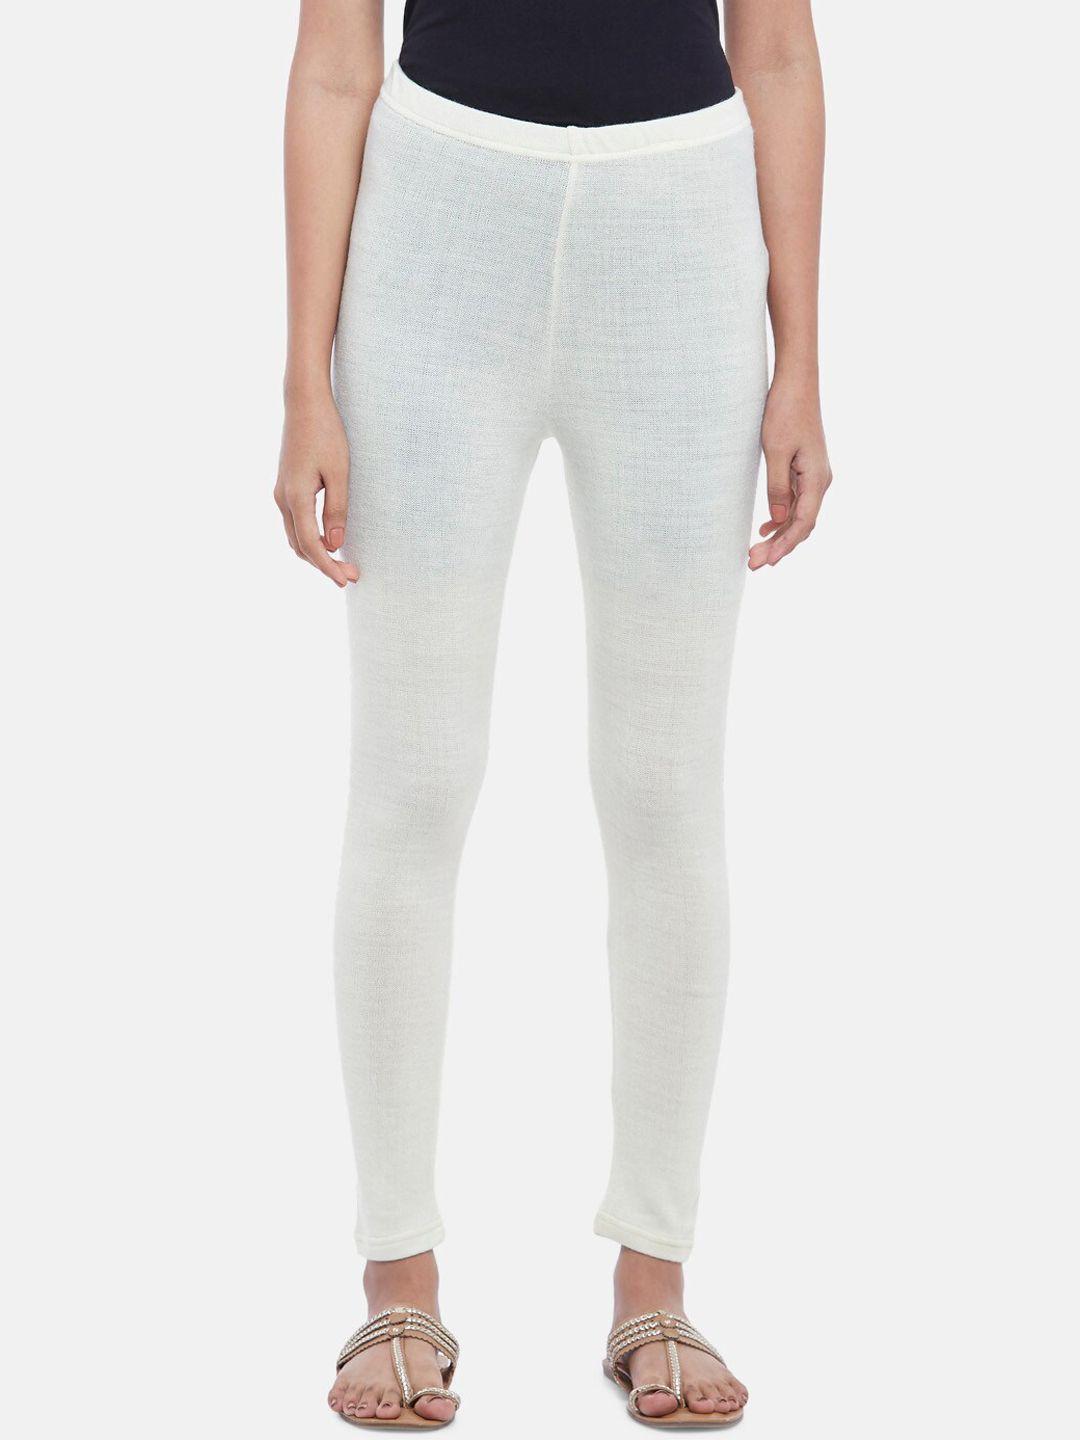 rangmanch by pantaloons women off white solid acrylic leggings